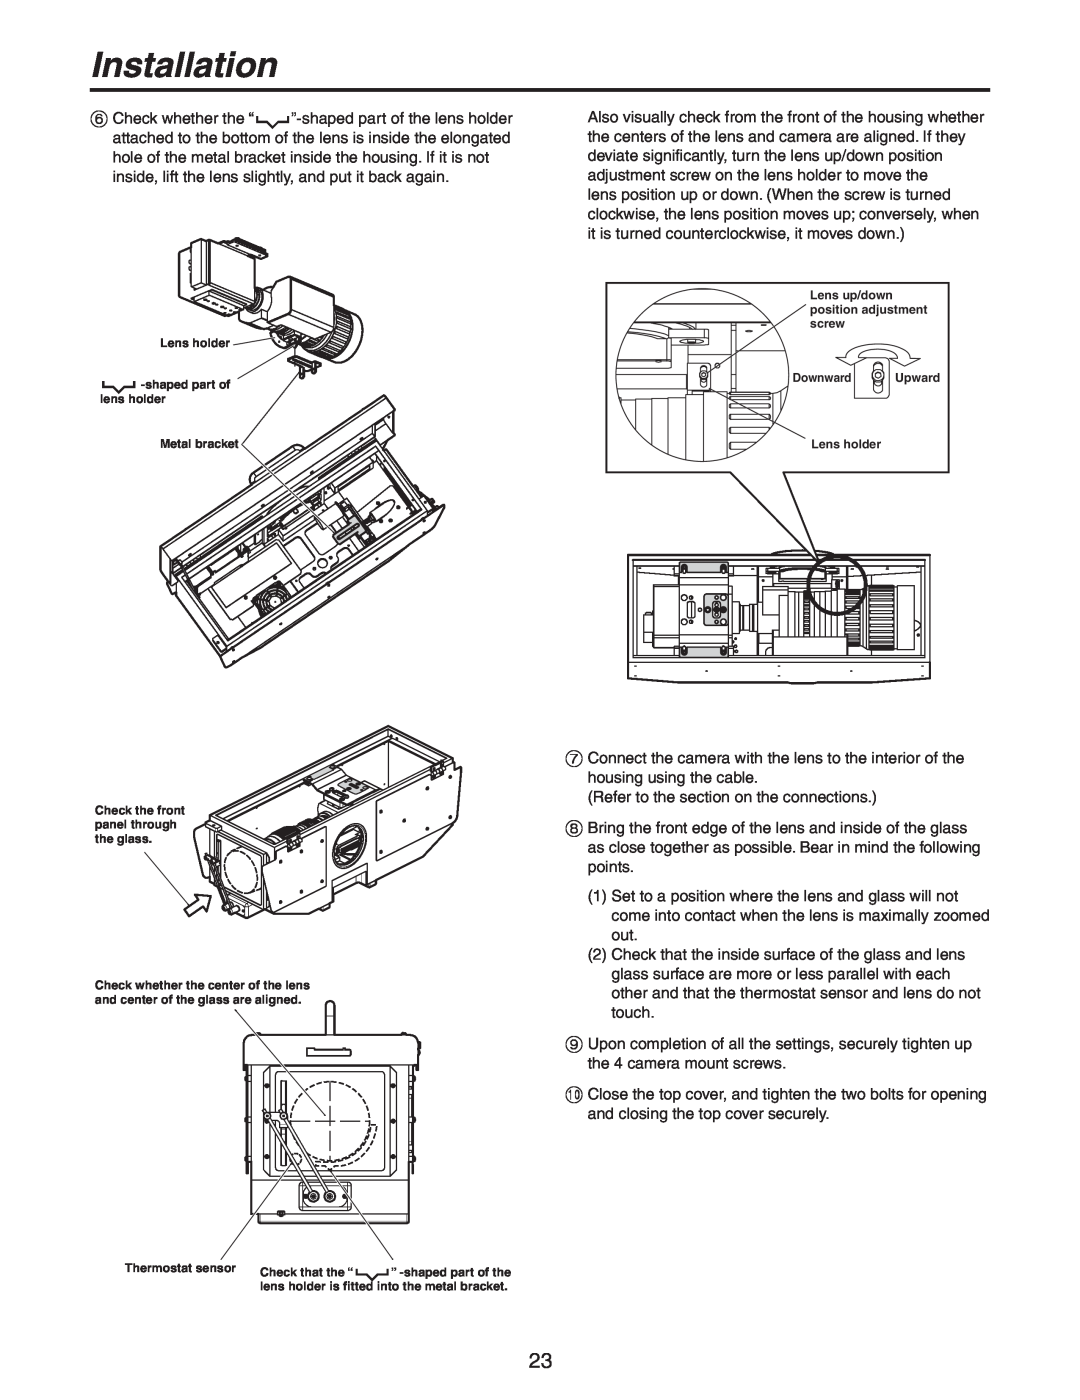 Panasonic AW-PH650N manual Installation, Lens holder shaped part of lens holder Metal bracket, Thermostat sensor 